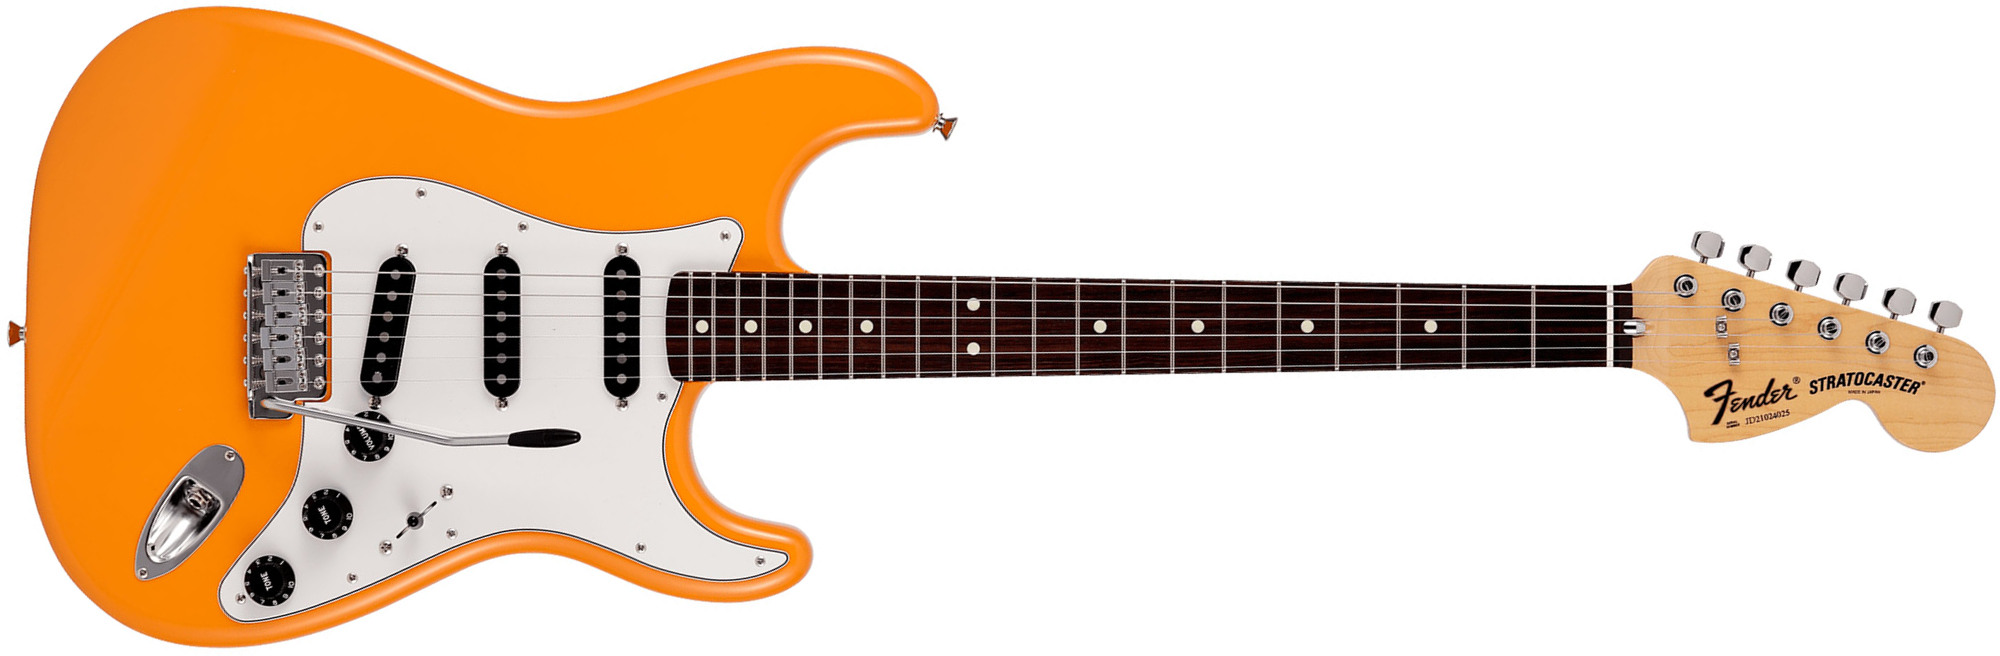 Fender Strat International Color Ltd Jap 3s Trem Rw - Capri Orange - E-Gitarre in Str-Form - Main picture